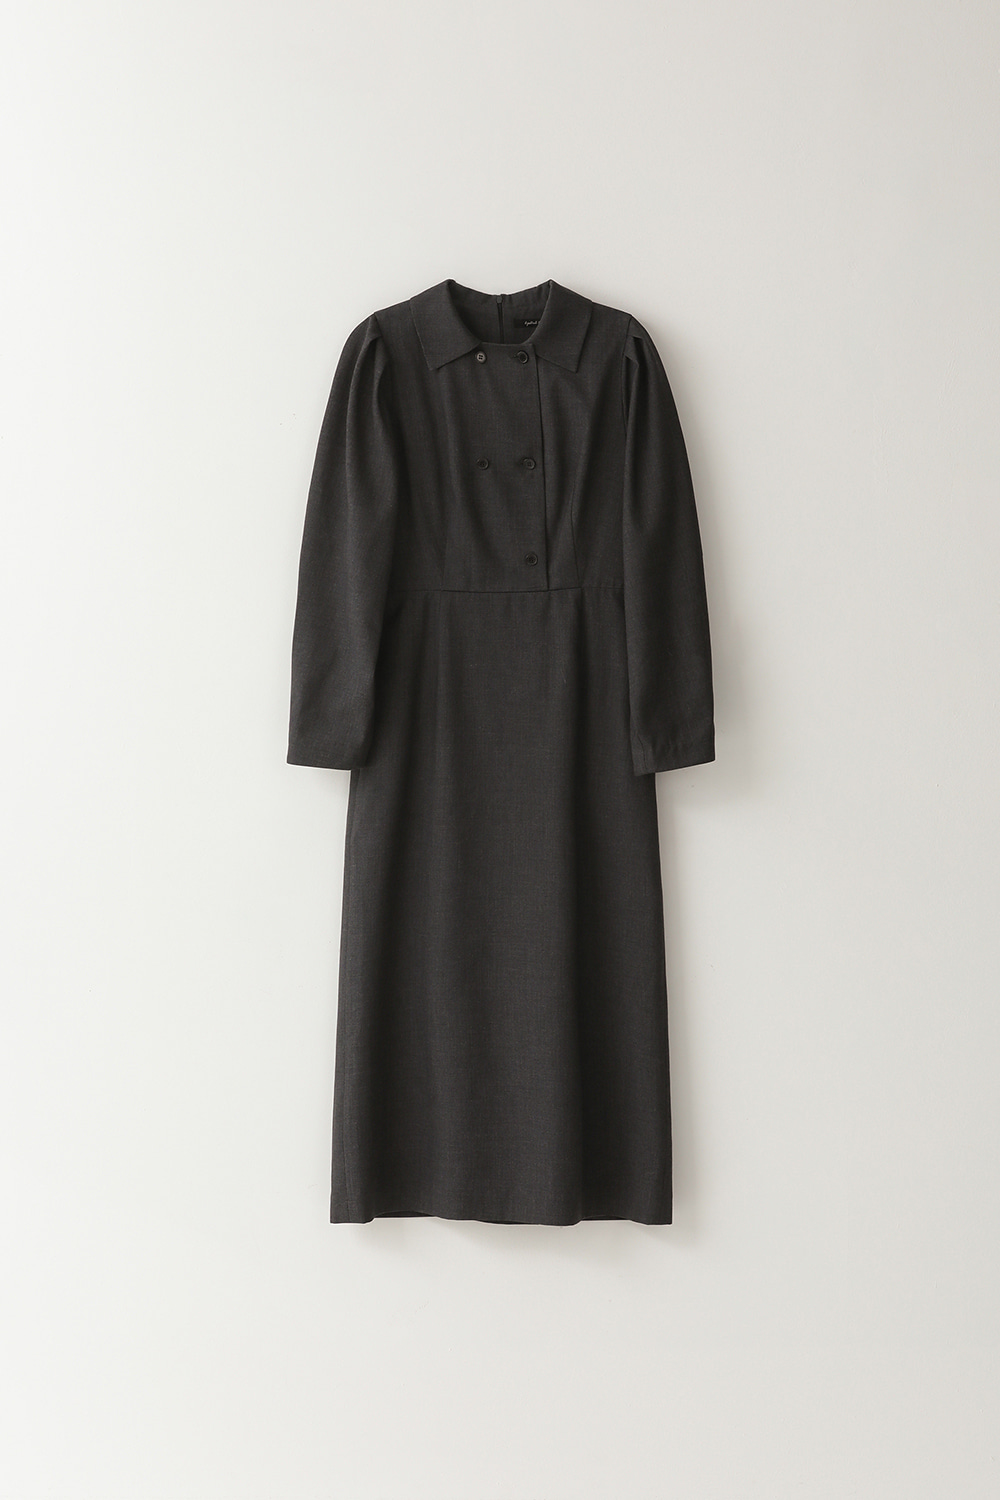 [Gray] Volume Sleeve Collar Dress